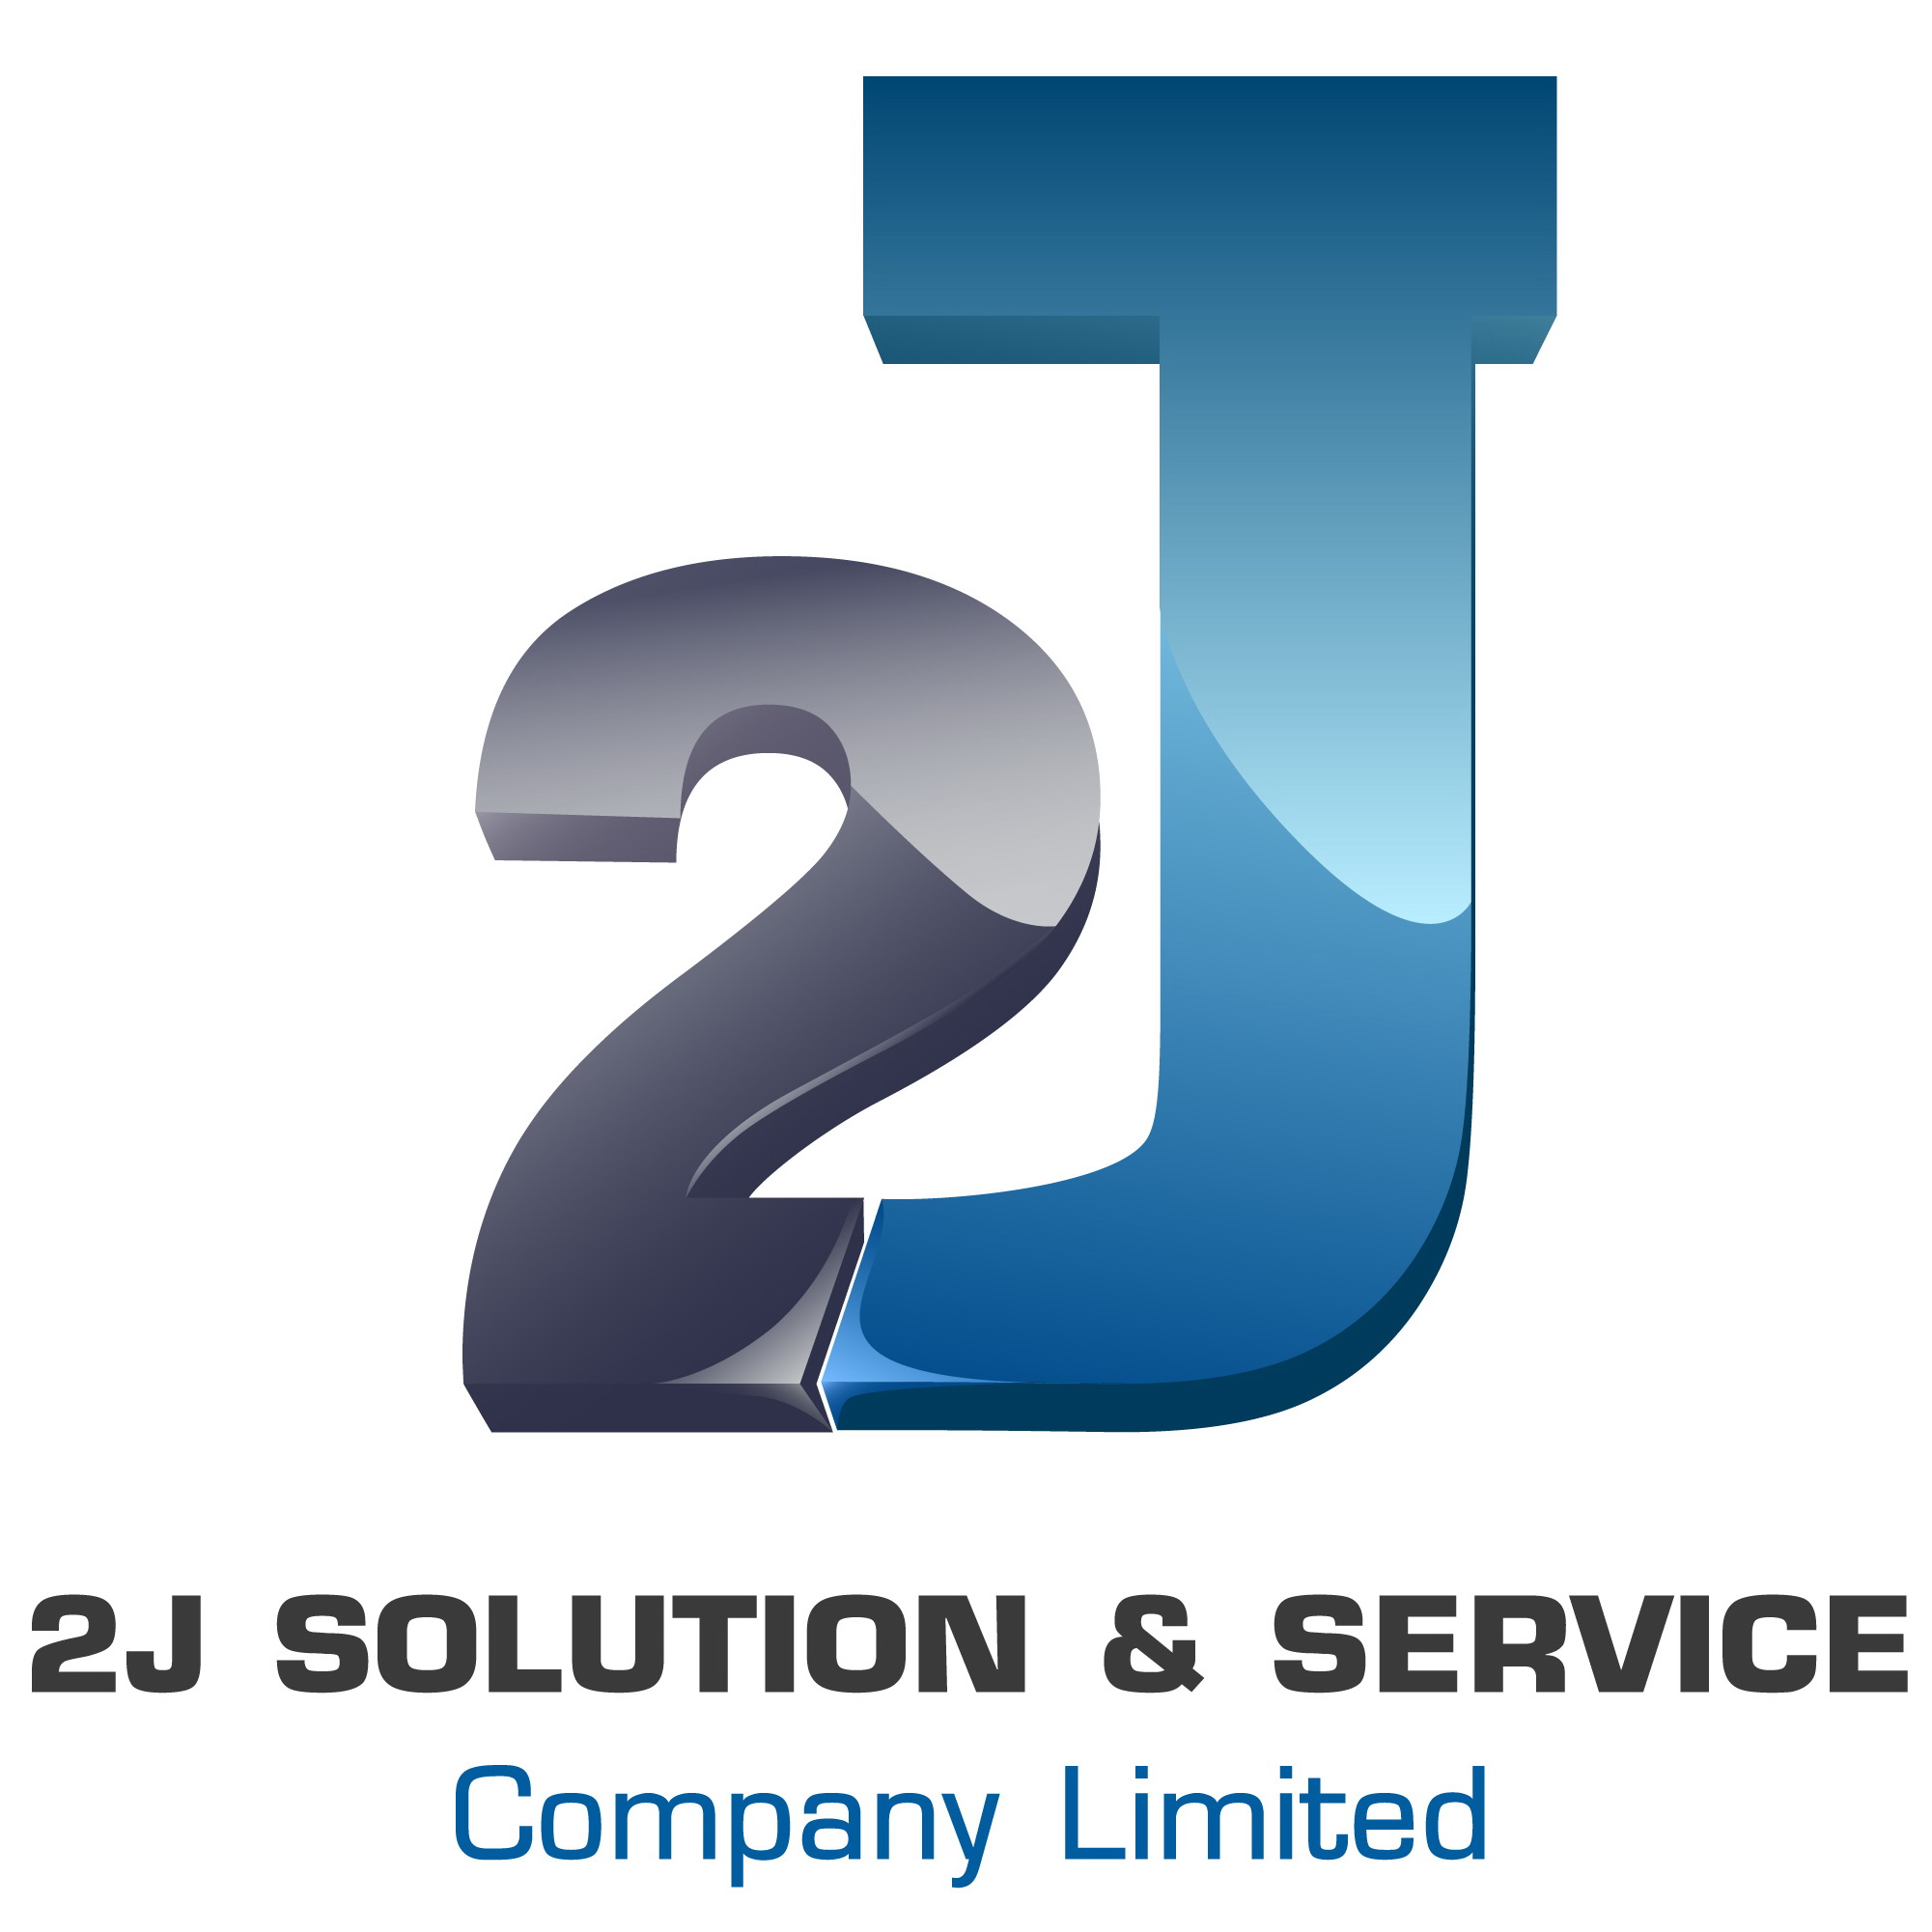 2J Solution & Service Co., Ltd.